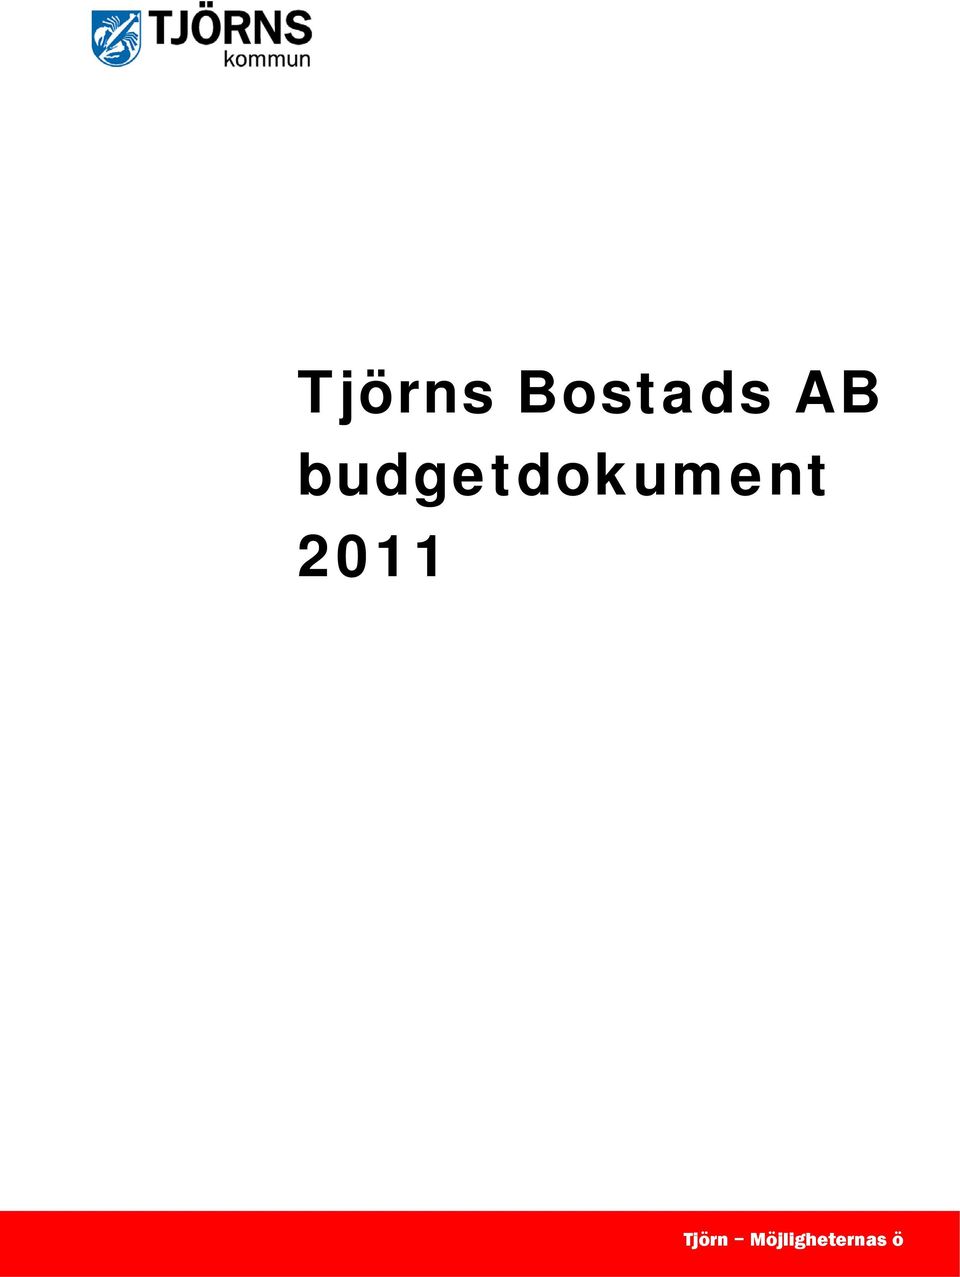 budgetdokument